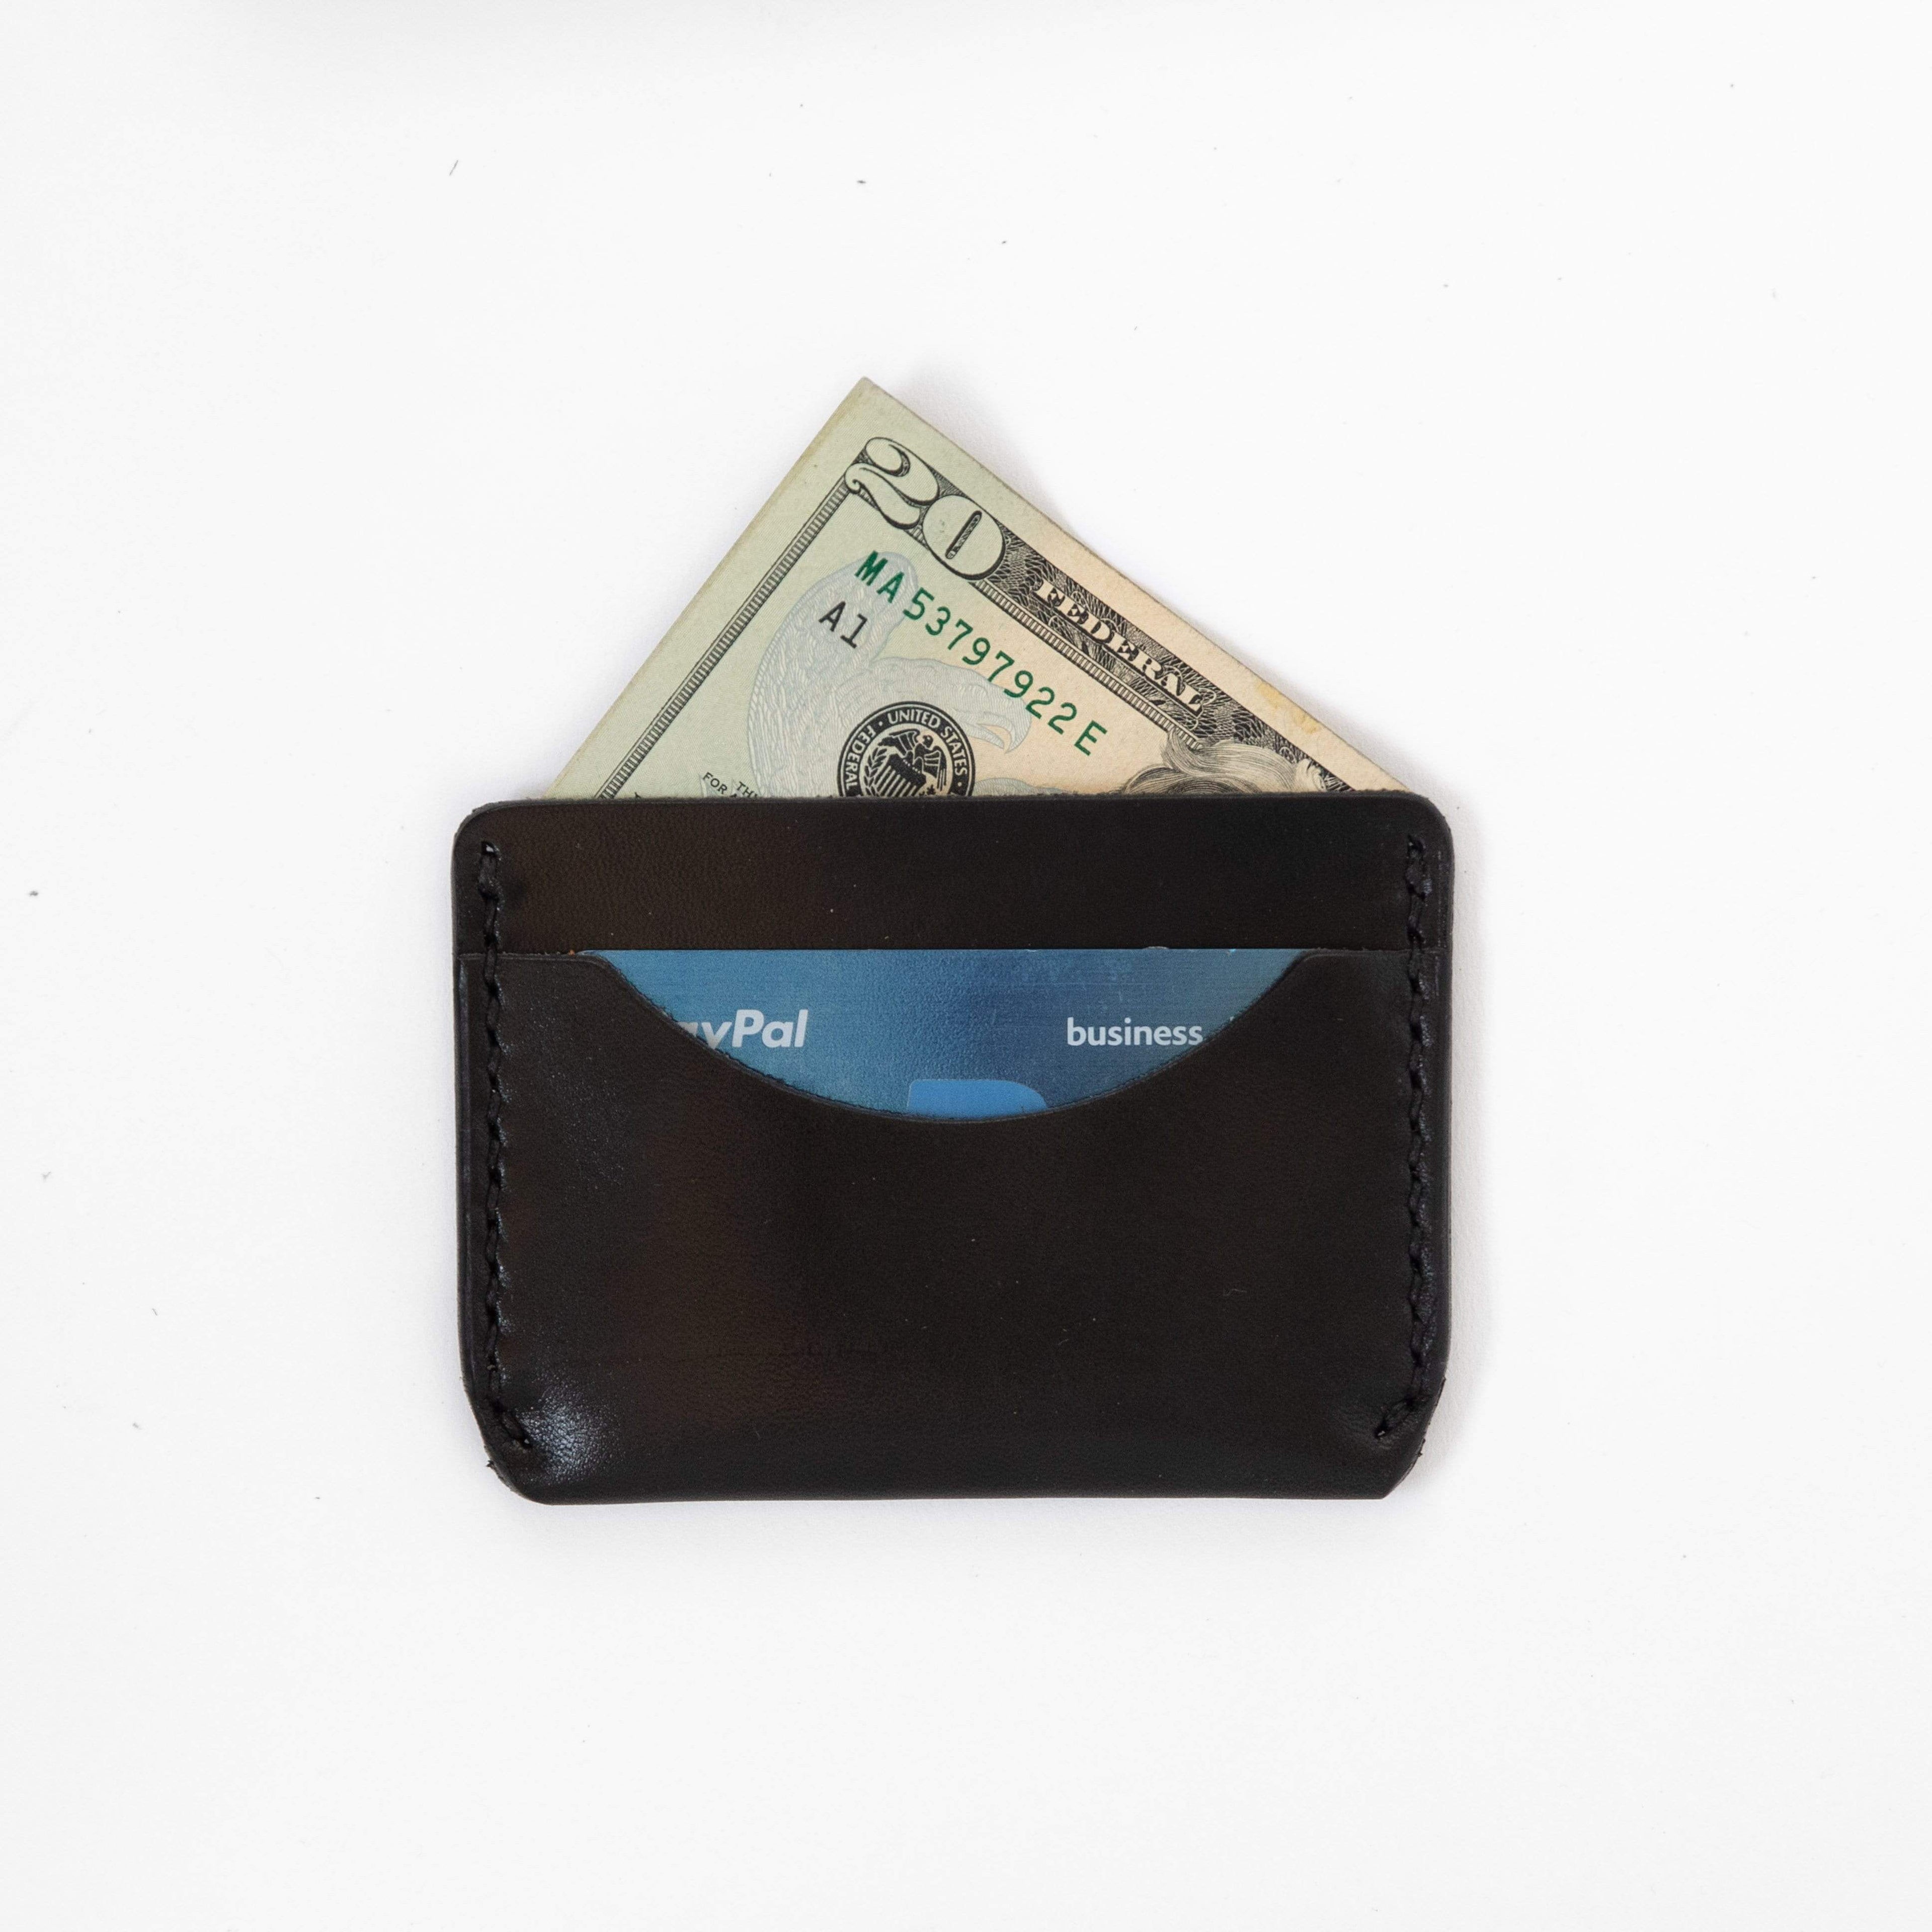 Black Leather Card Case Wallet